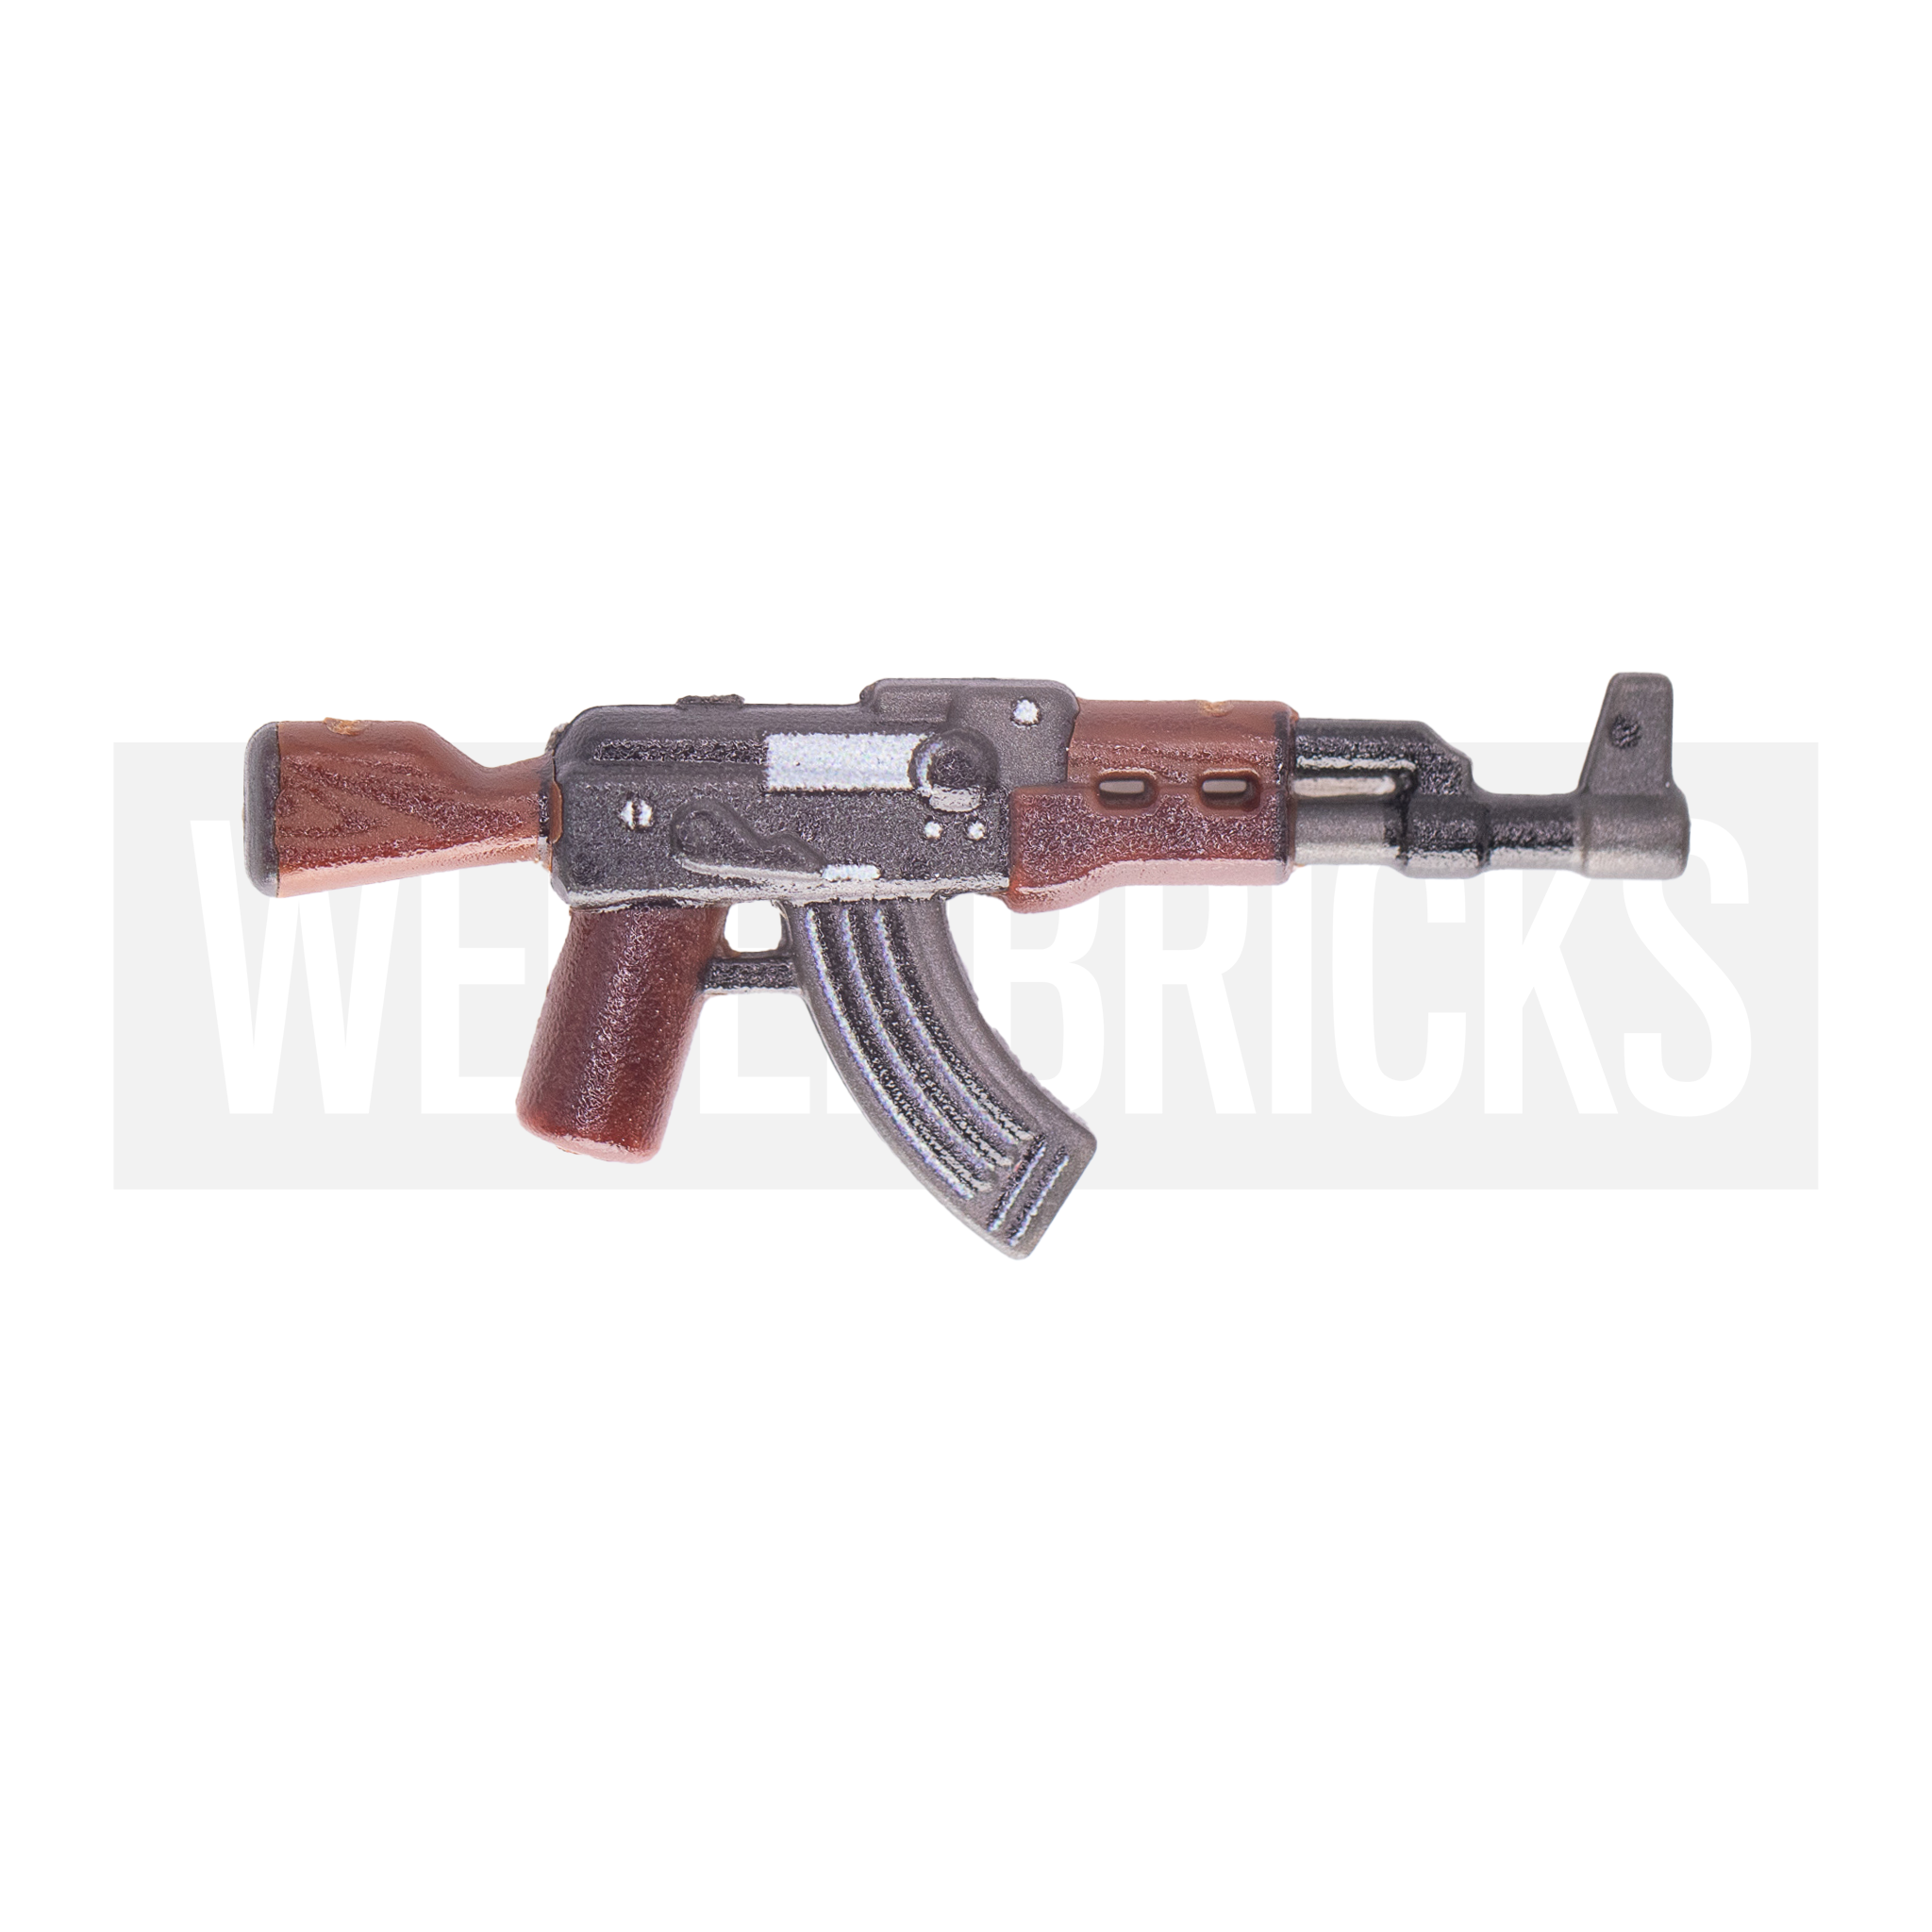 AK-47 bedruckt - Leyile Brick